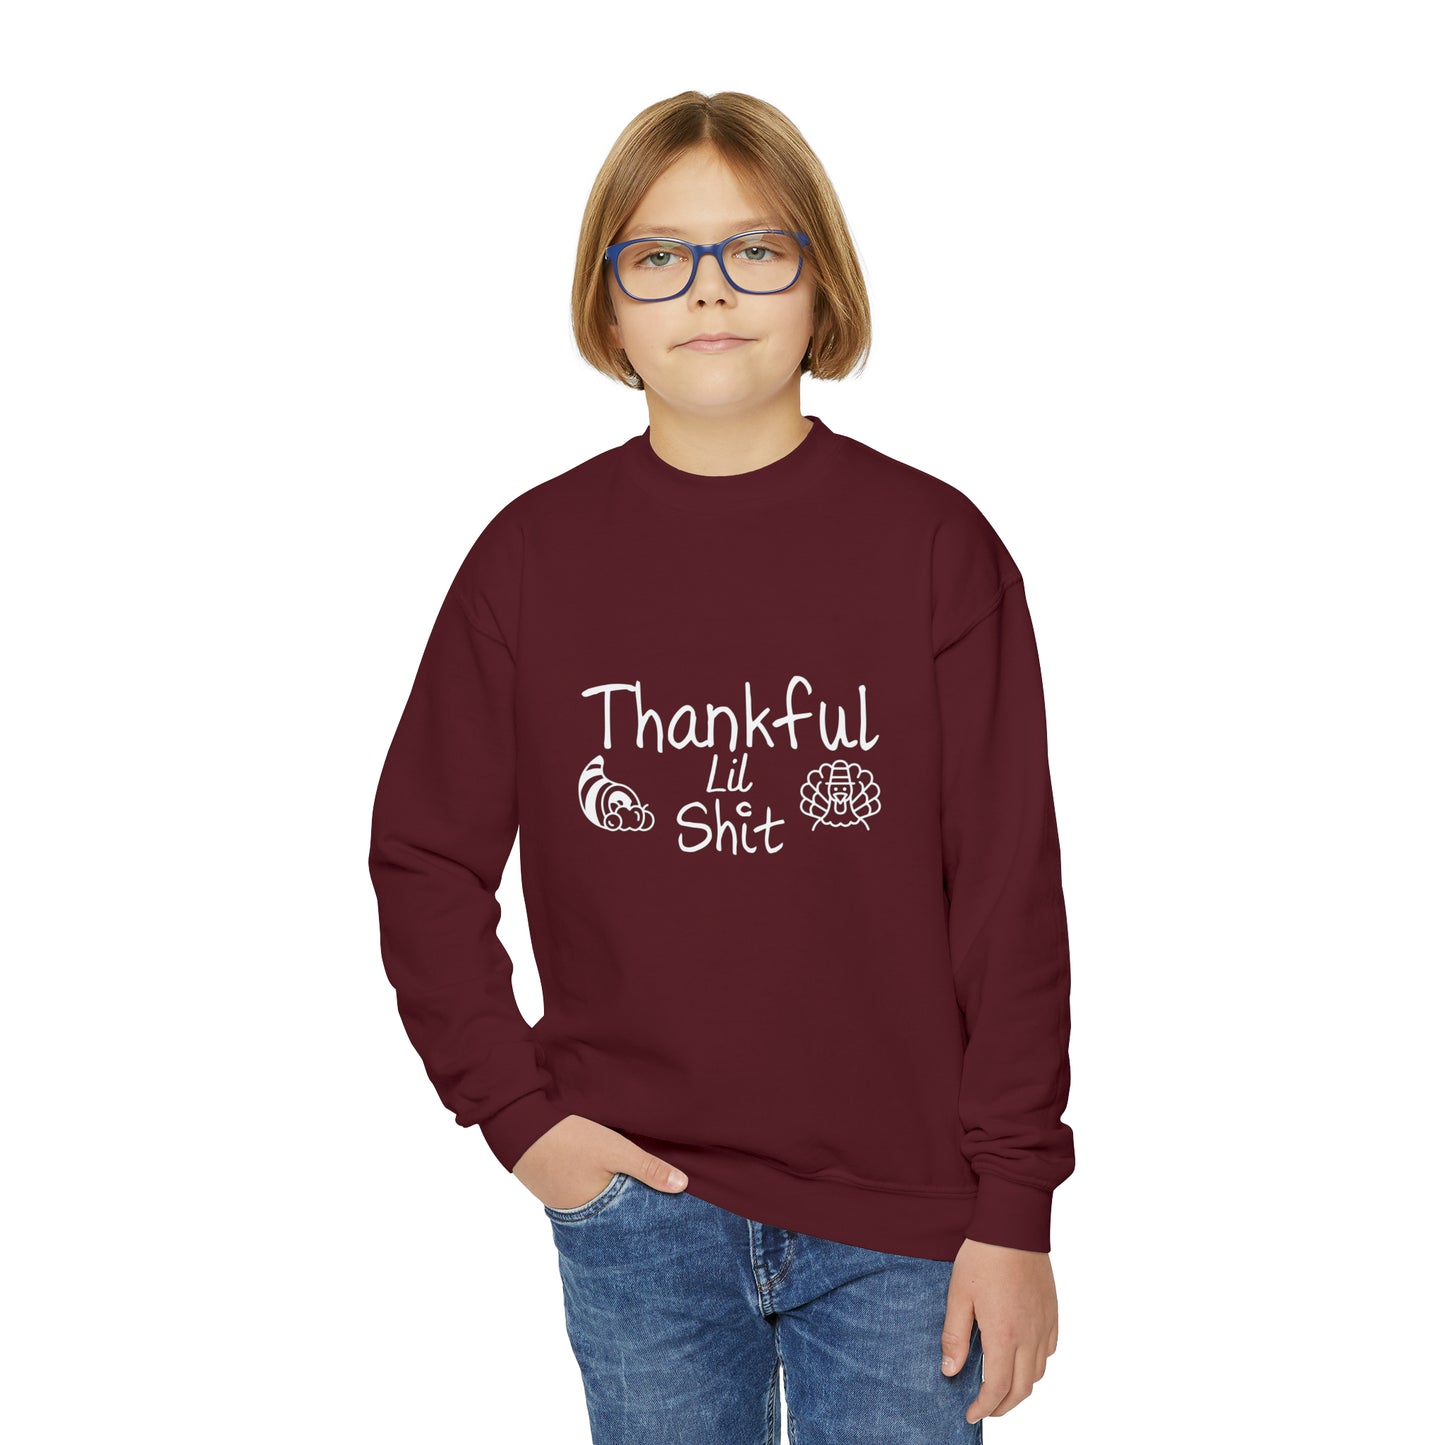 Youth Crewneck Sweatshirt, Holiday Sweatshirt, Thankful lil, Kids Loose Fitting Long Sleeve